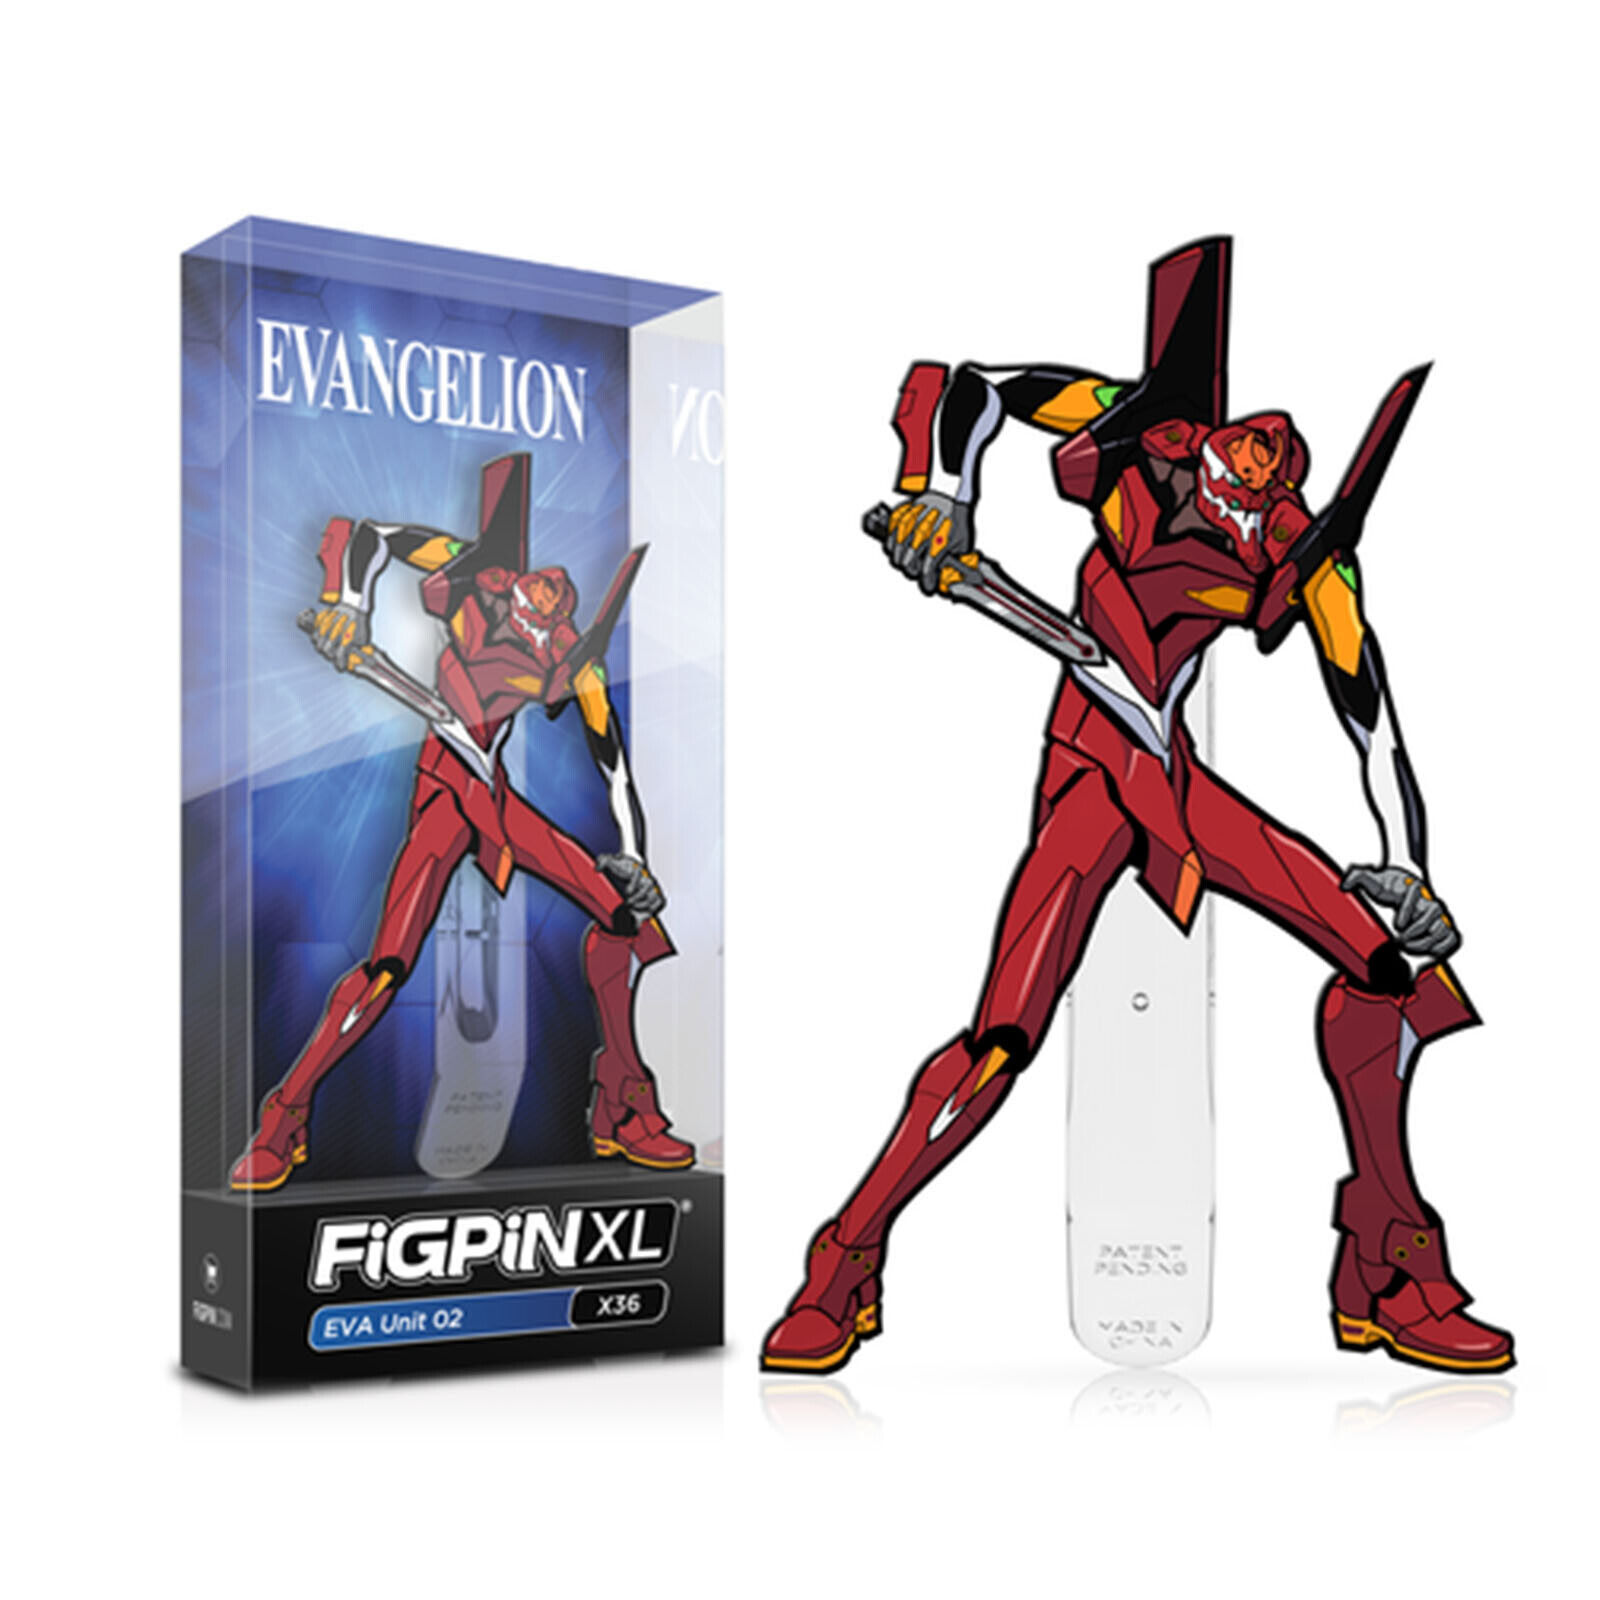 FiGPiN XL Neon Genesis Evangelion EVA Unit 01 Collectible Pin #X36